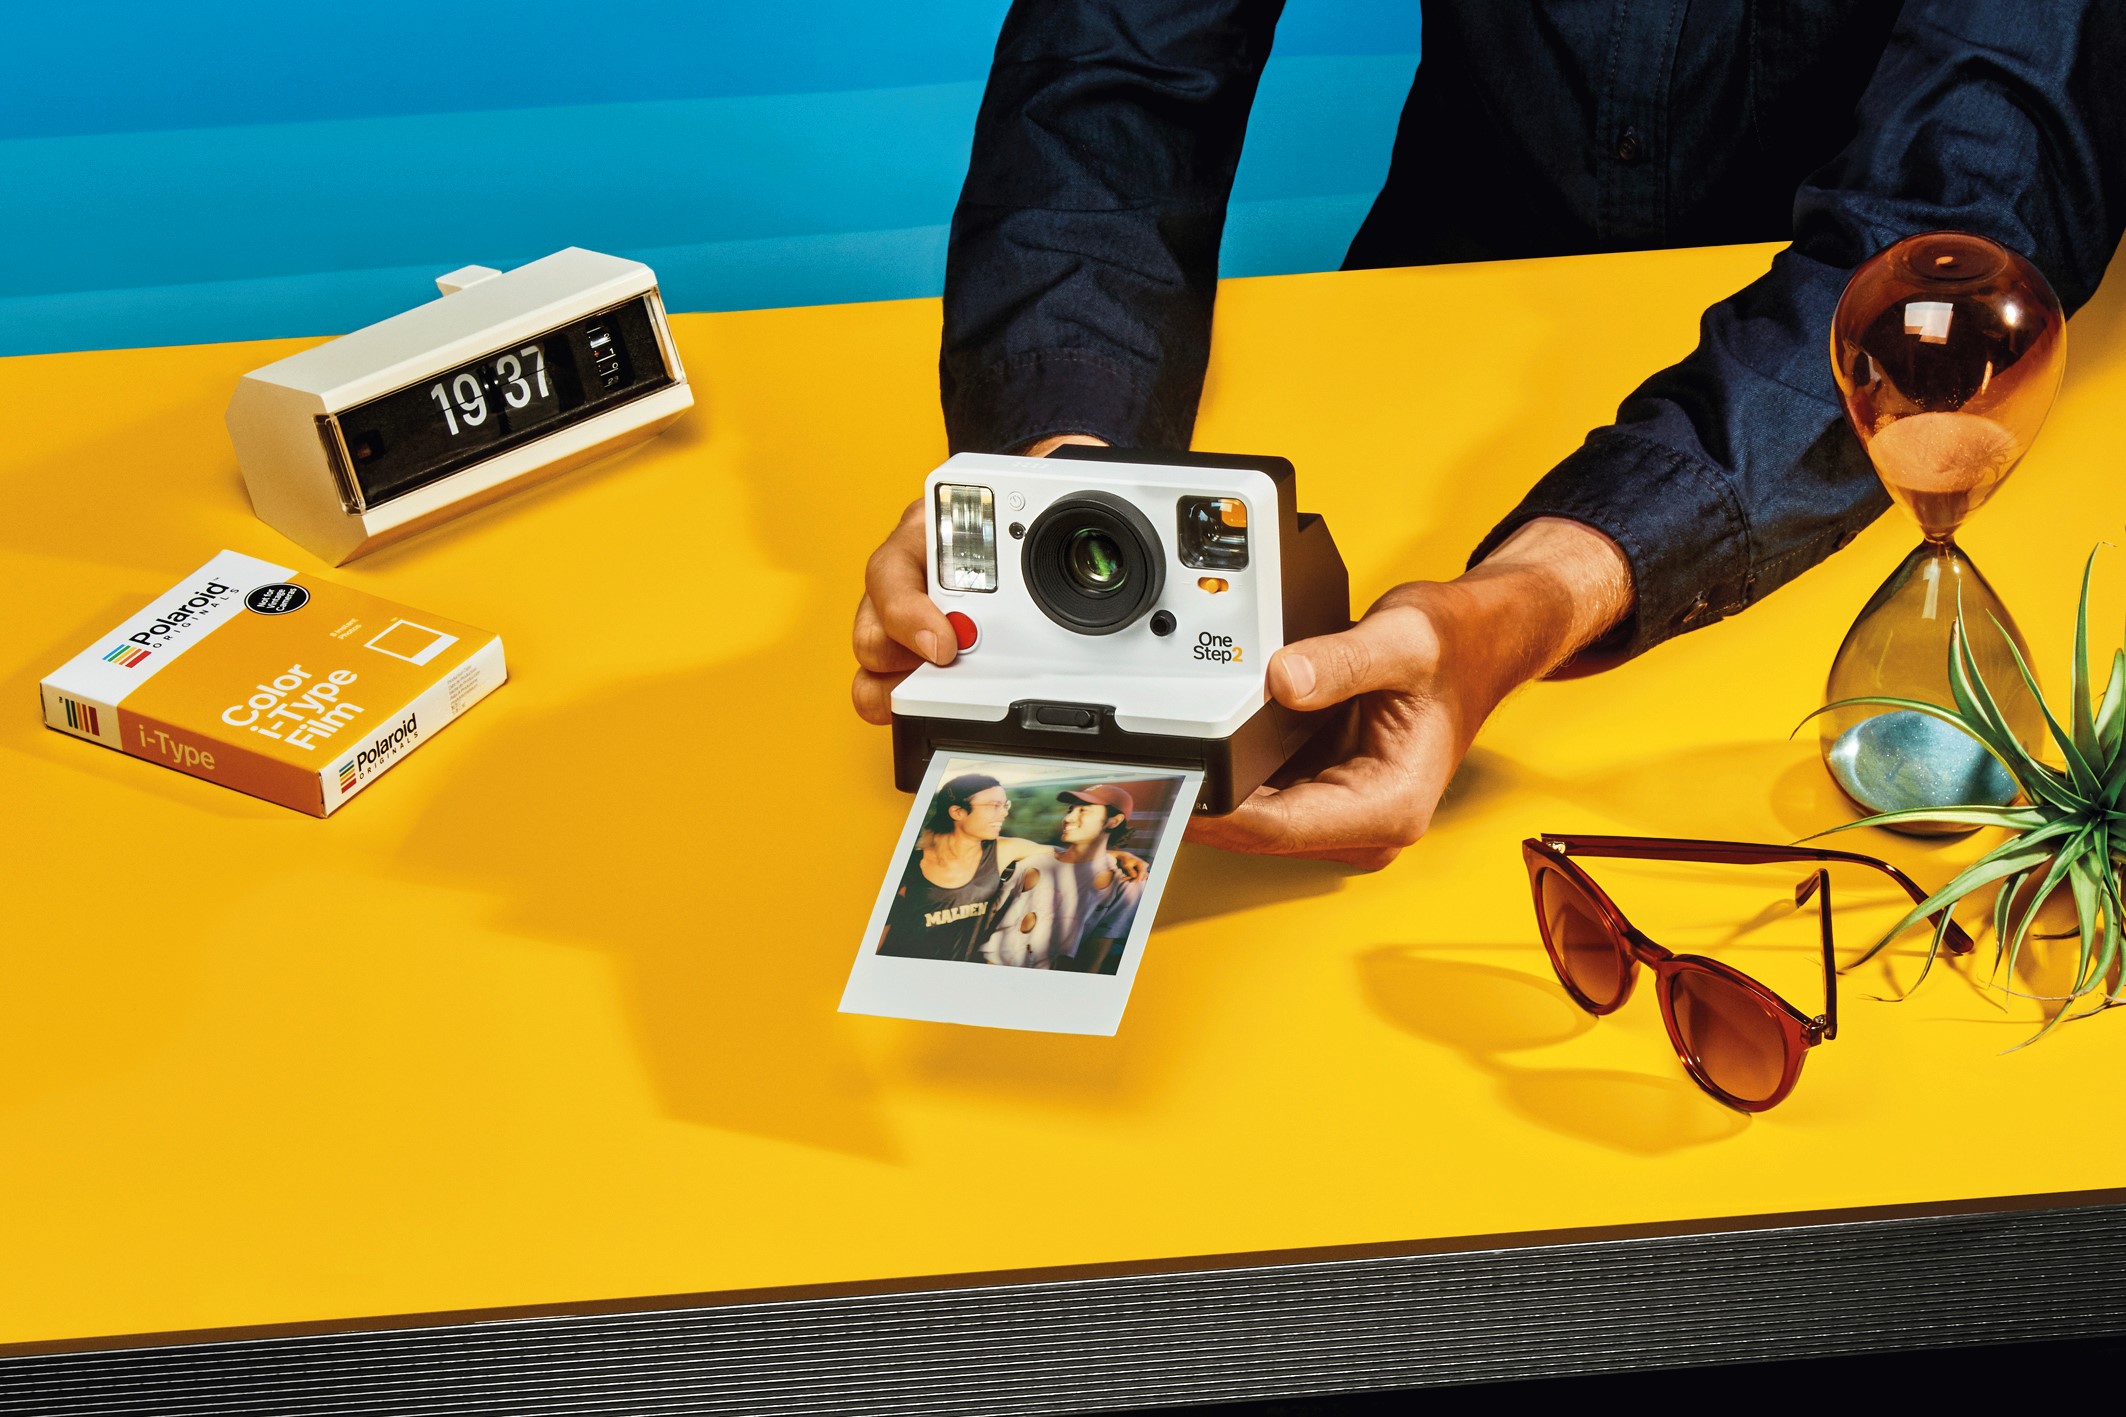 Polaroid Originals will launch a photo printer that takes a photo